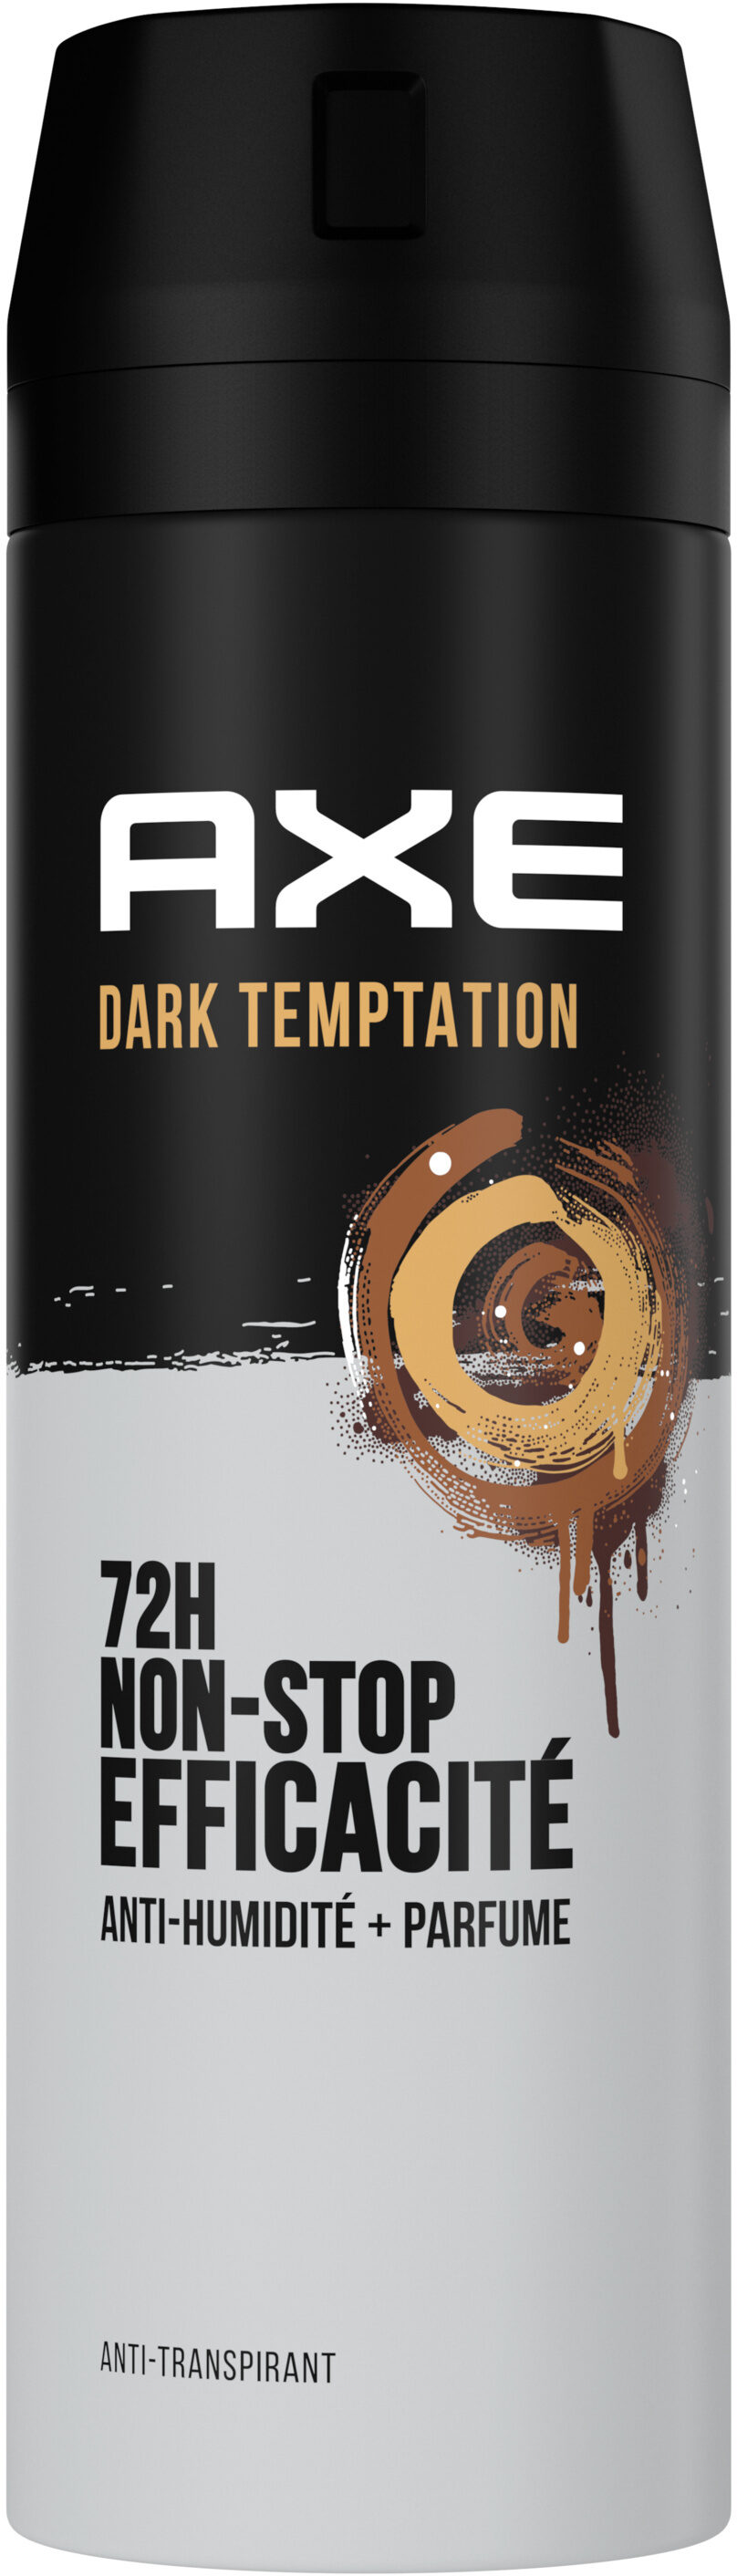 AXE Anti-Transpirant Homme Dark Temptation 72h Anti-Humidité 200ml - Product - fr